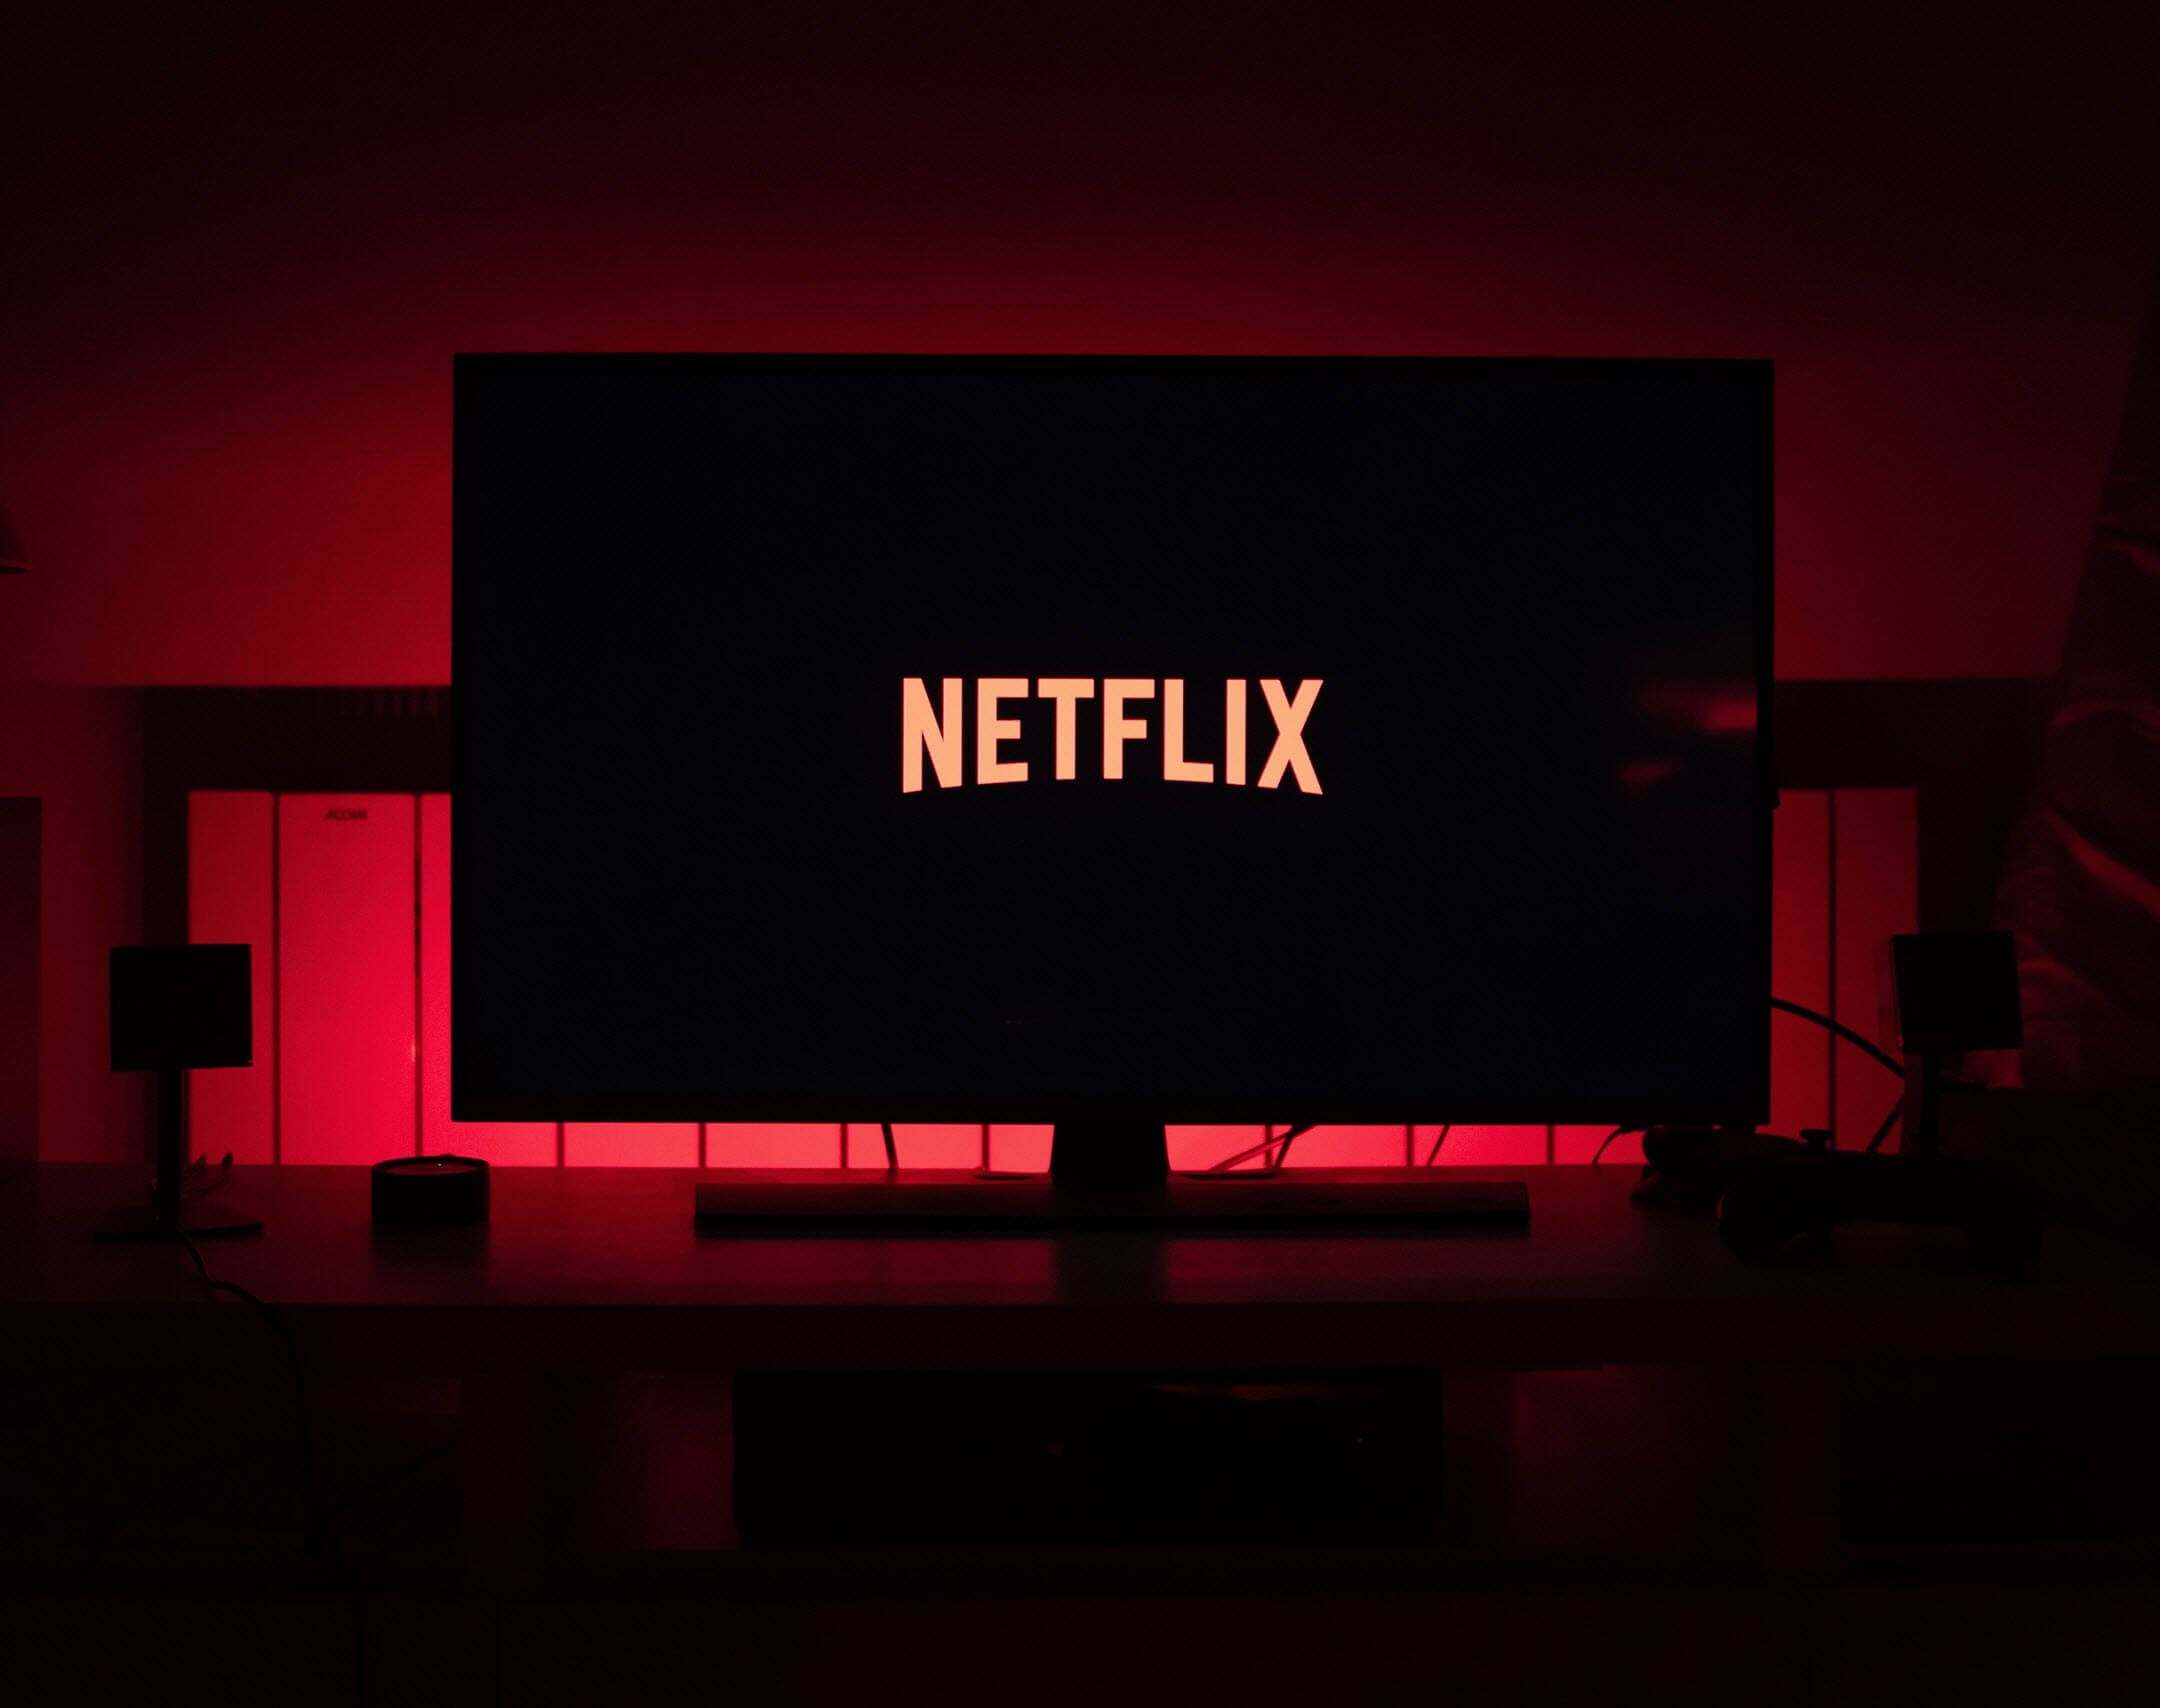 PEST Analysis of Netflix: How Politics and the Economy impact the Media  Provider